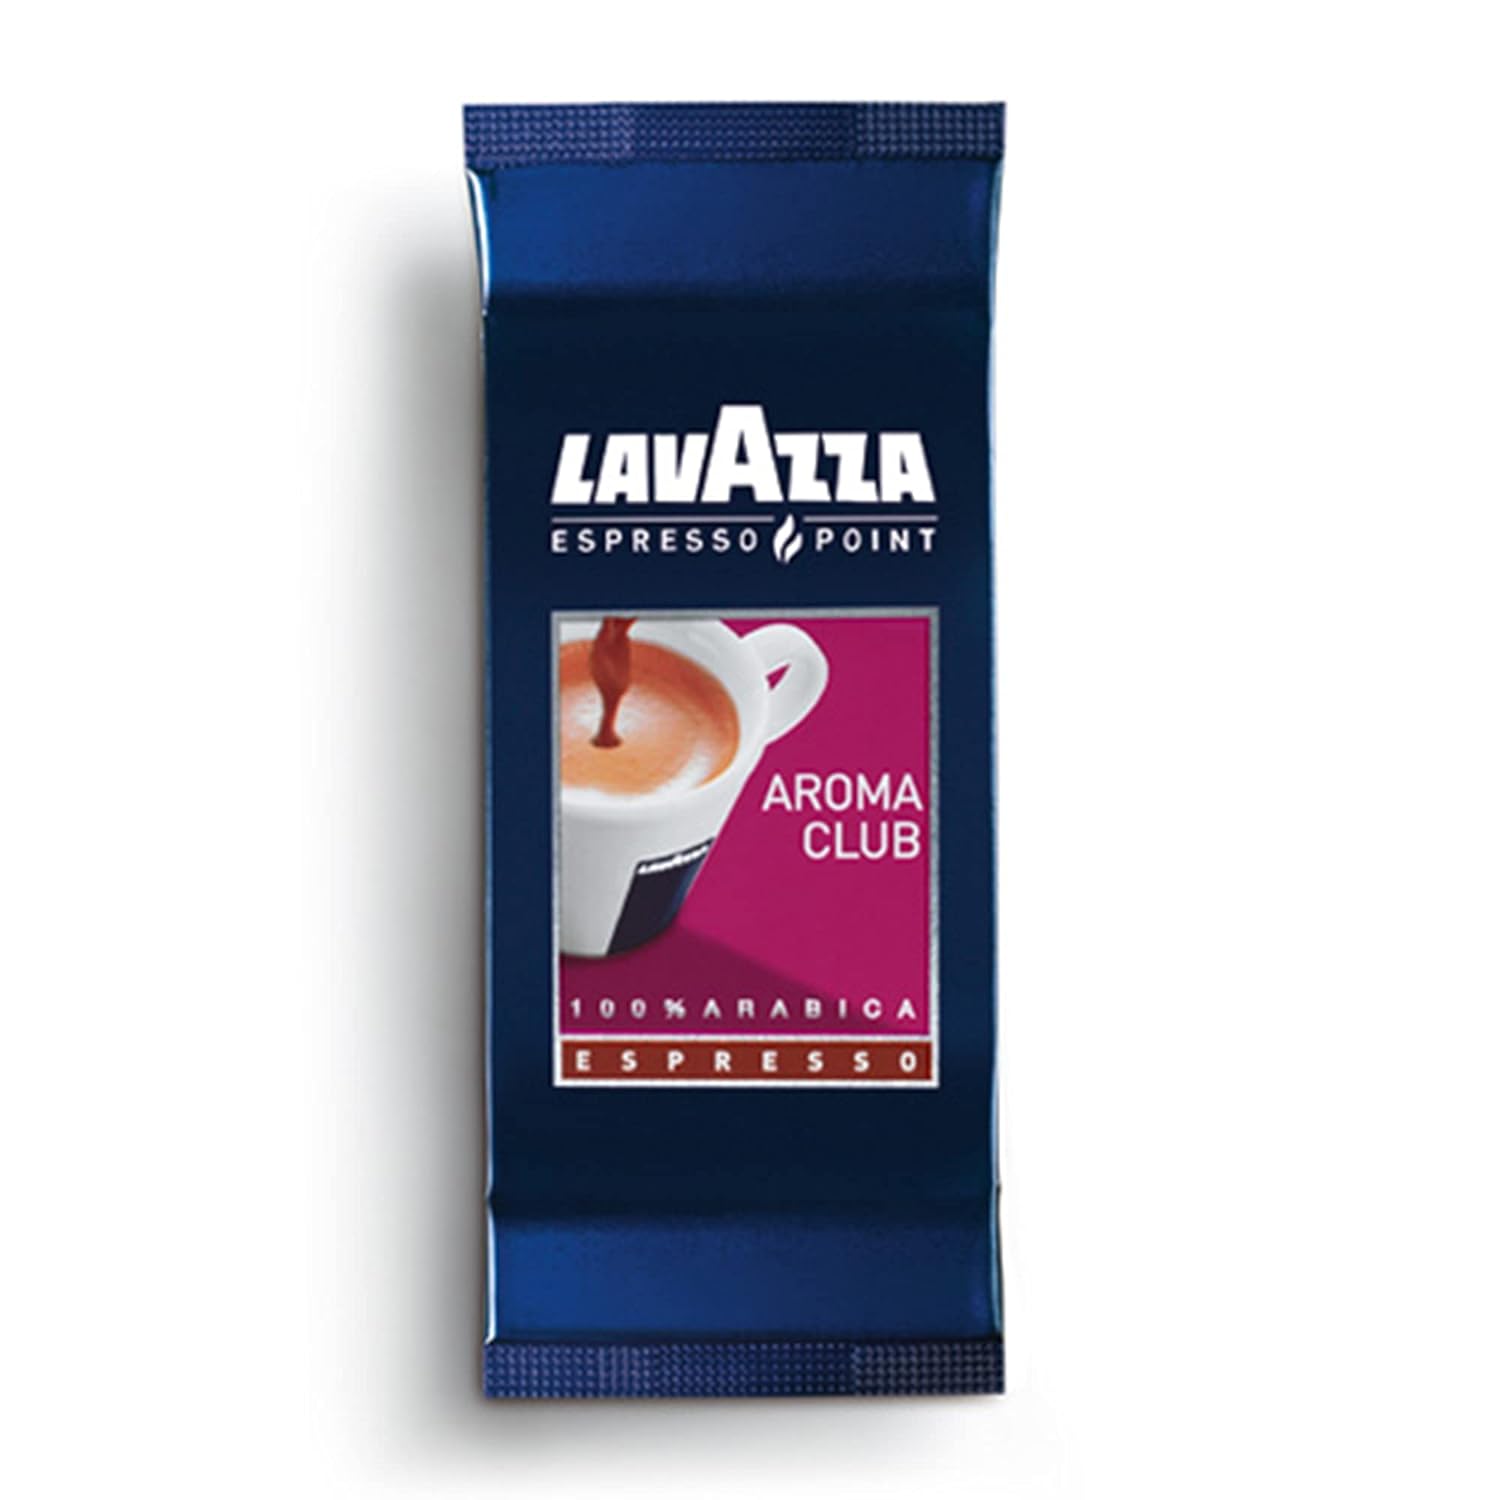 Espresso Point Cartridges Aroma Club 100% Arabica Blend 625g 100/Box : Everything Else